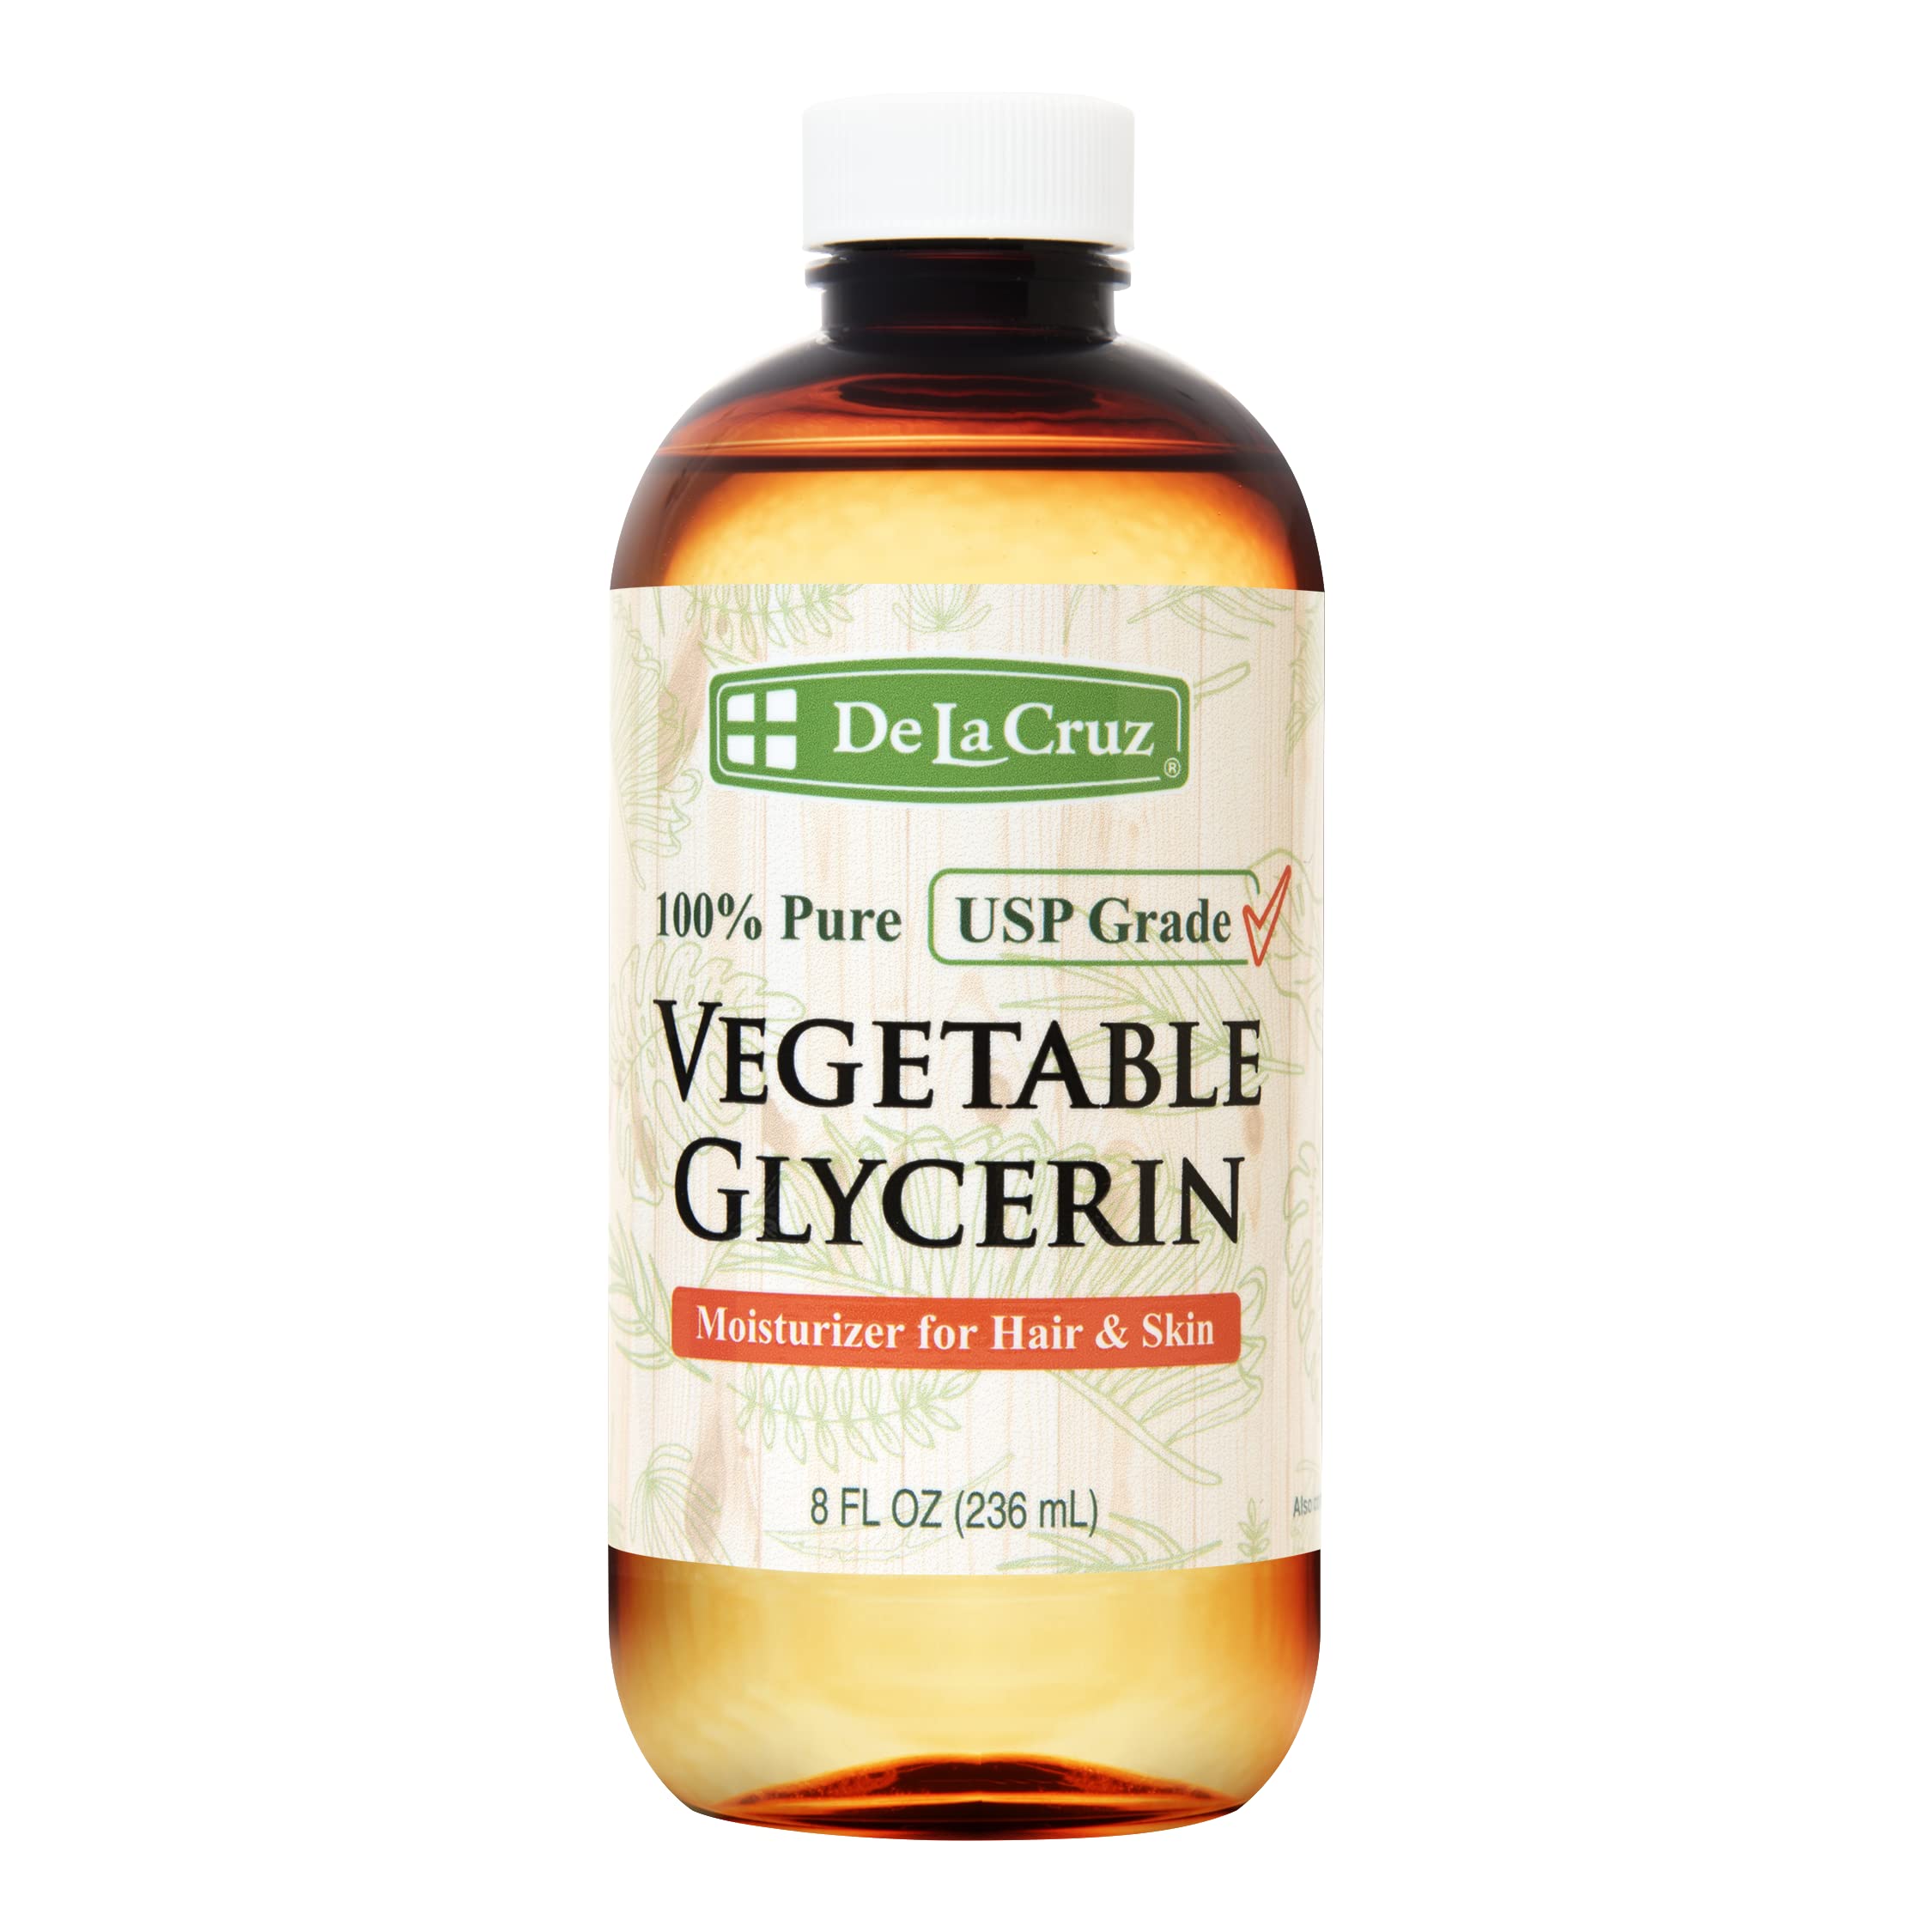 Moisturizing vegetable glycerin